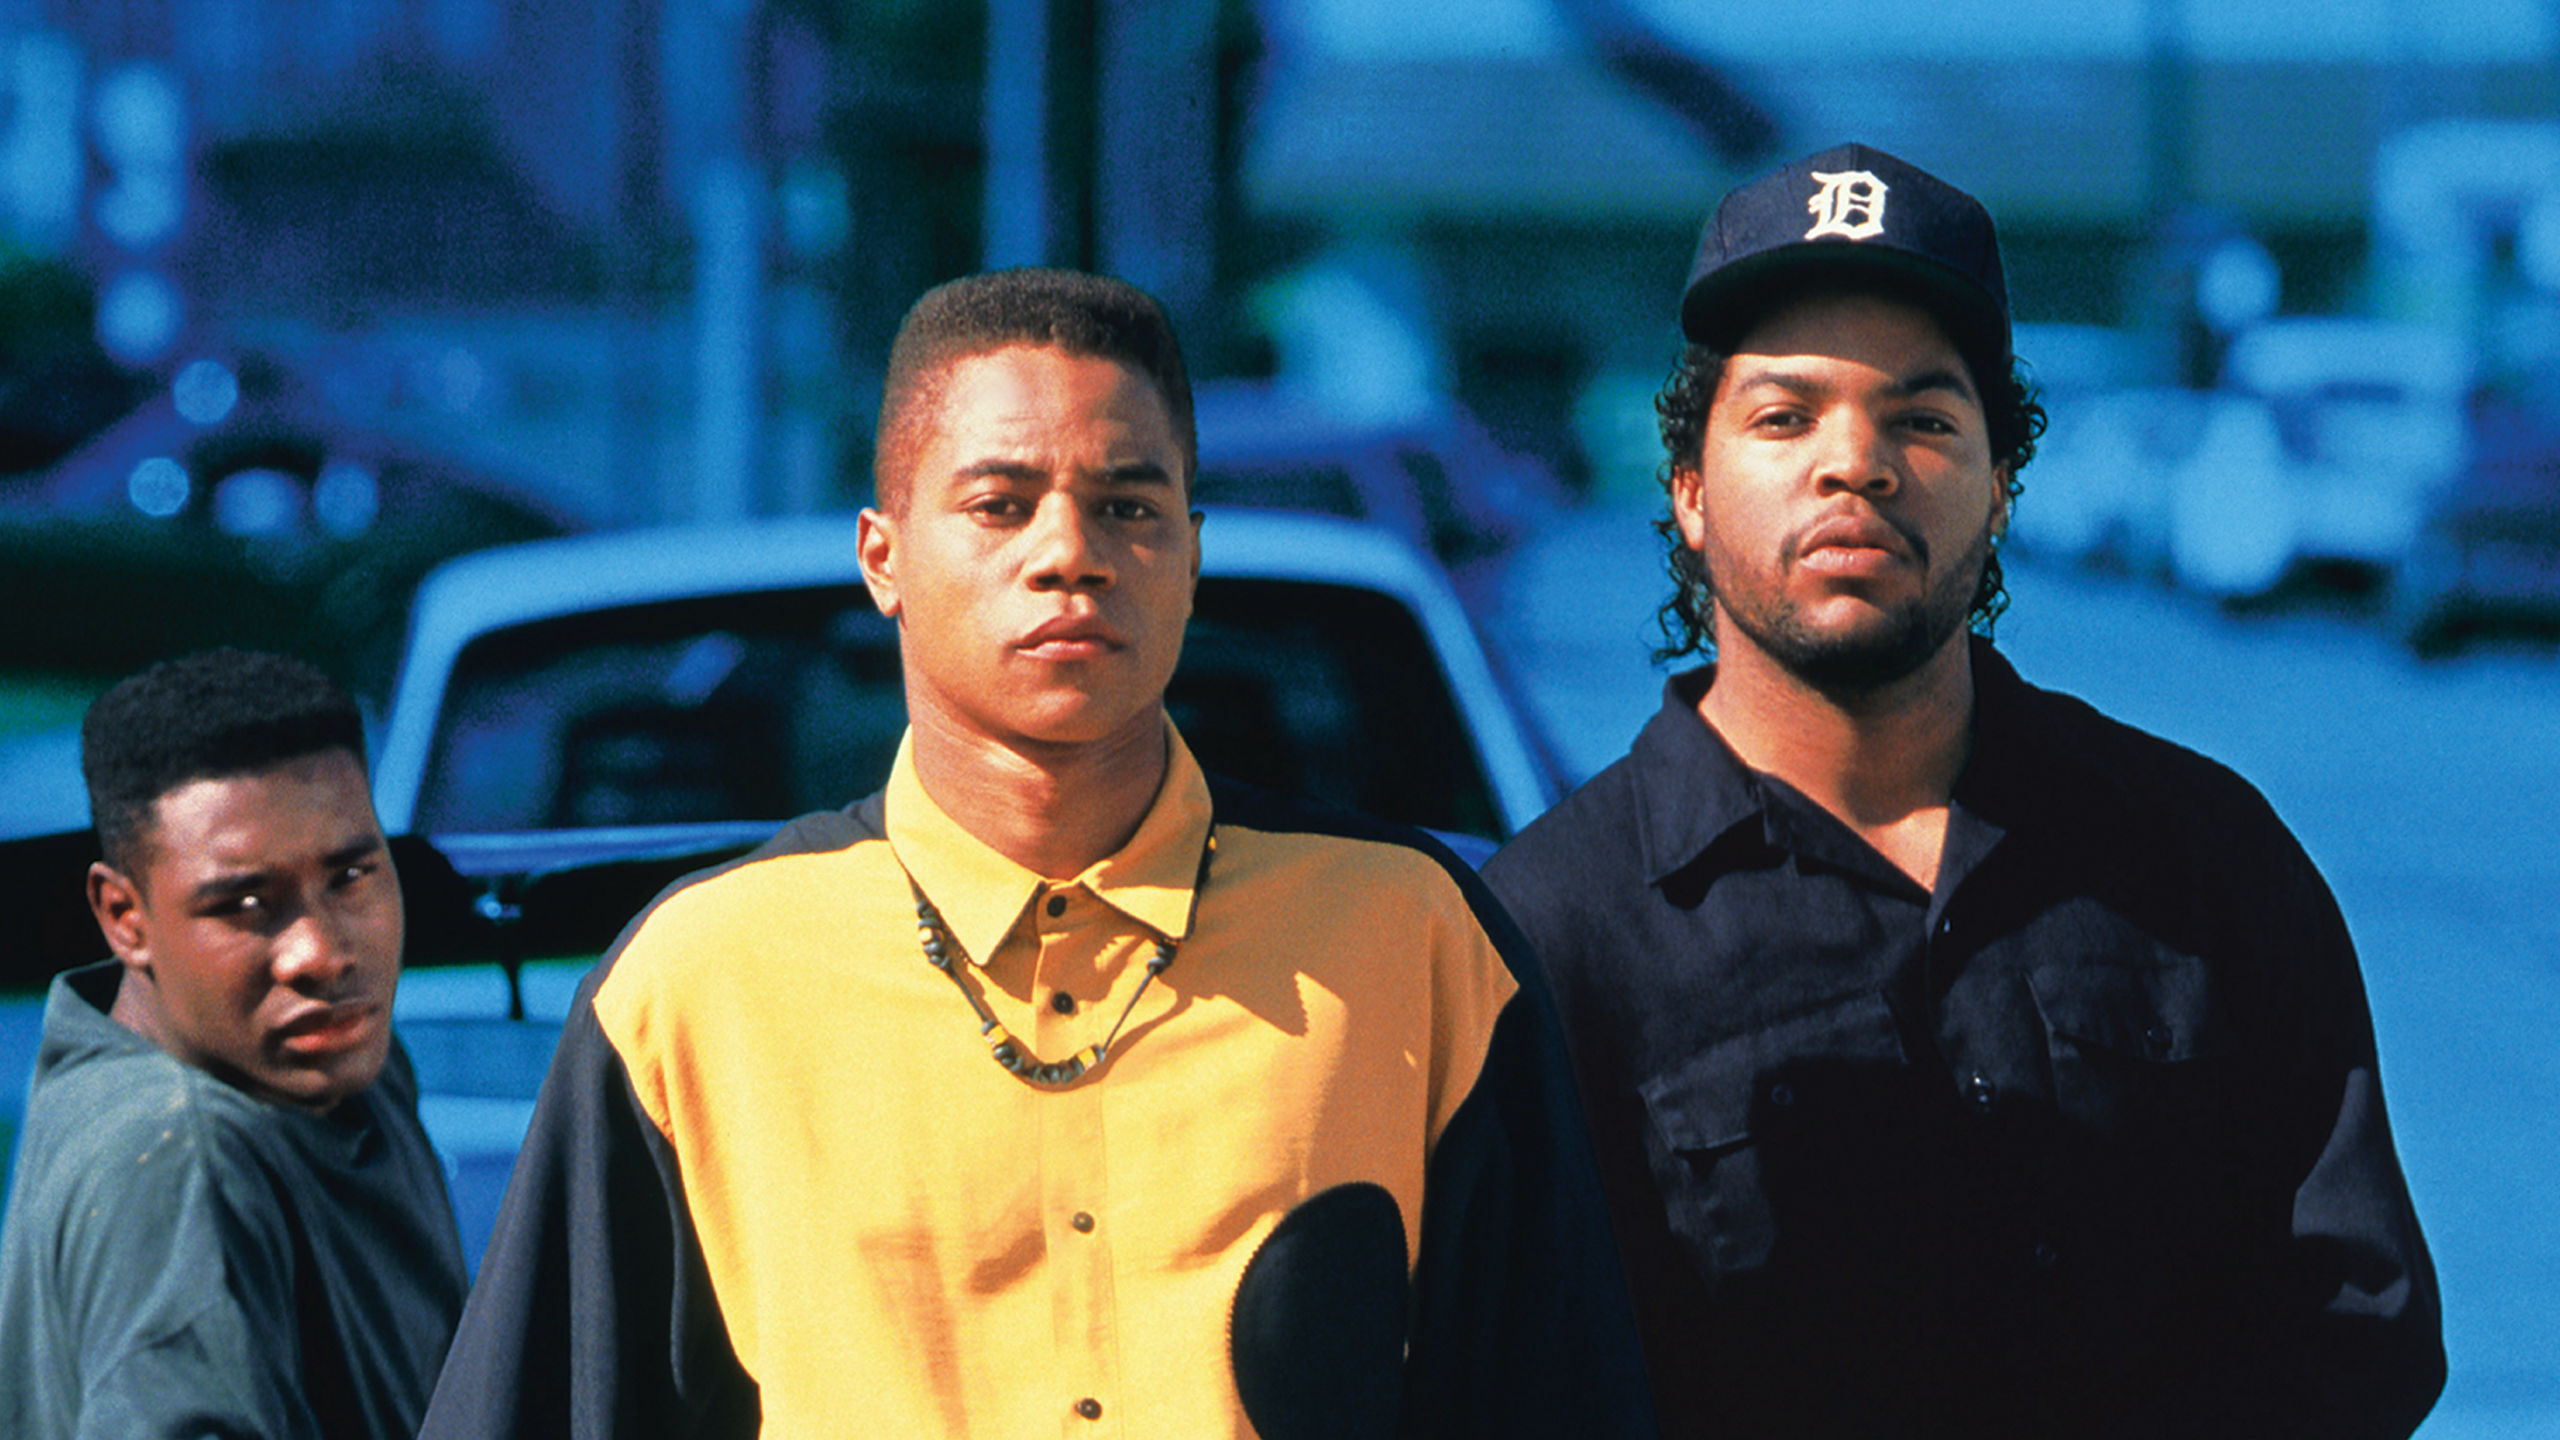 Мужчины по соседству. Айс Кьюб ребята с улицы. Ребята с улицы (1991) Boyz n the Hood.